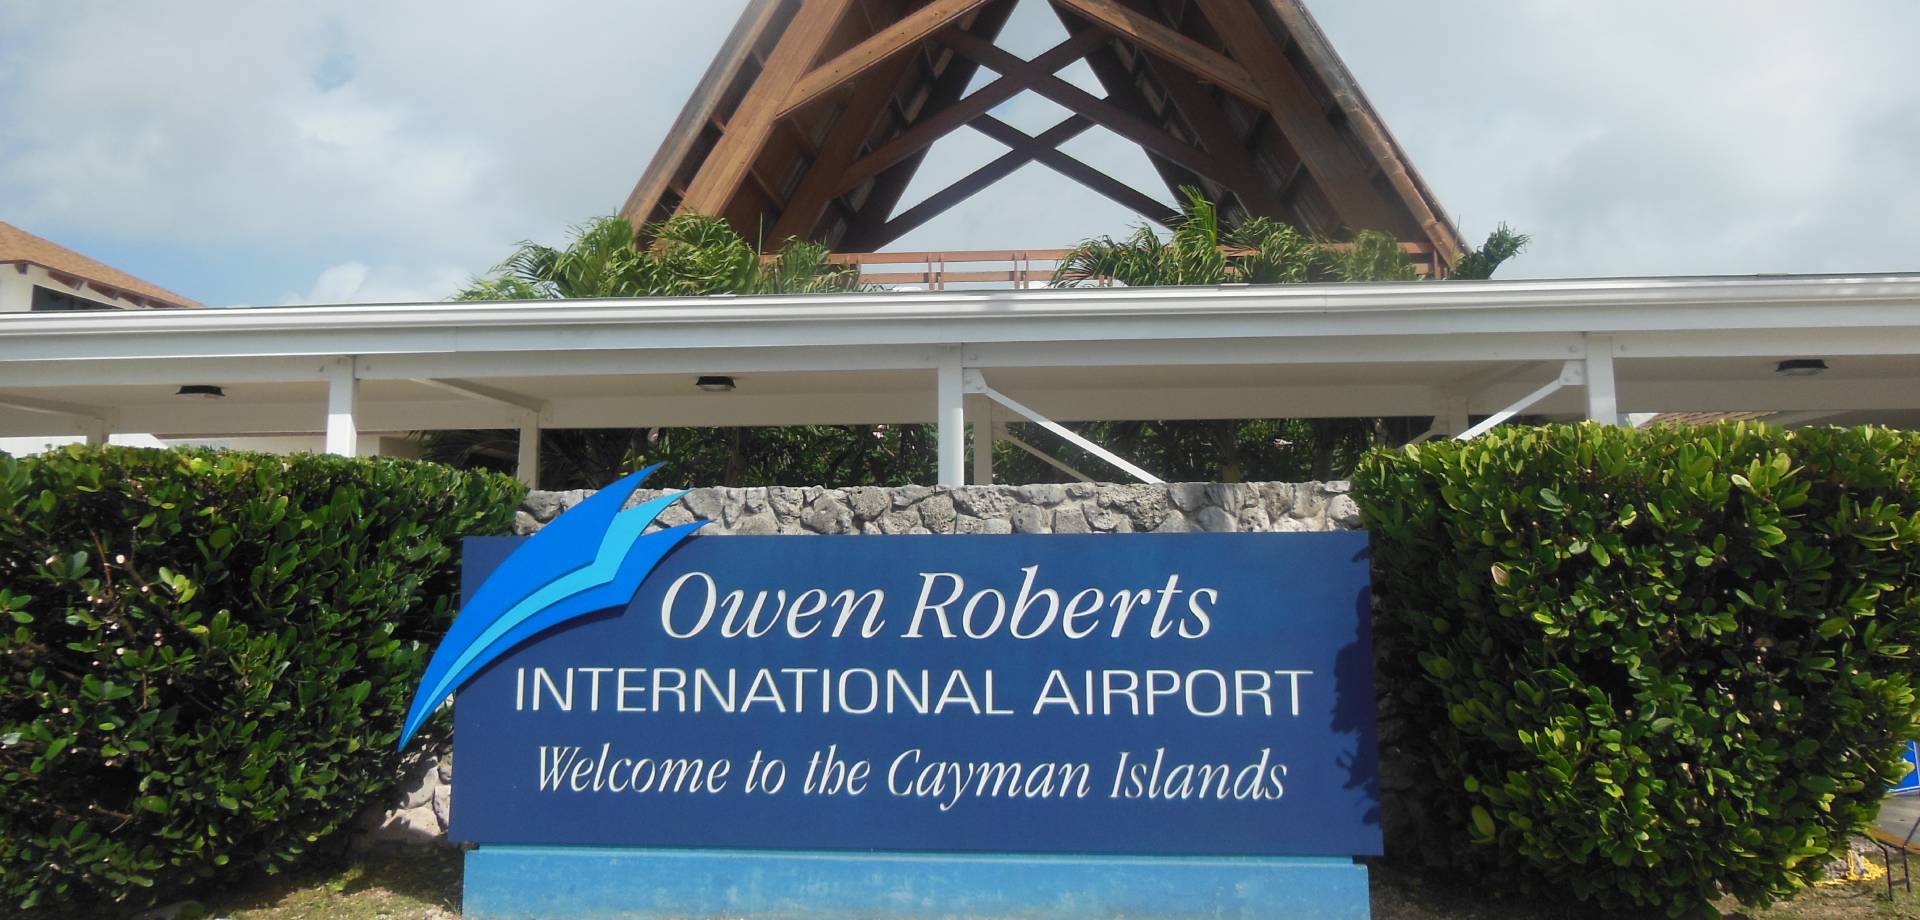 Overview of Owen Roberts International Airport